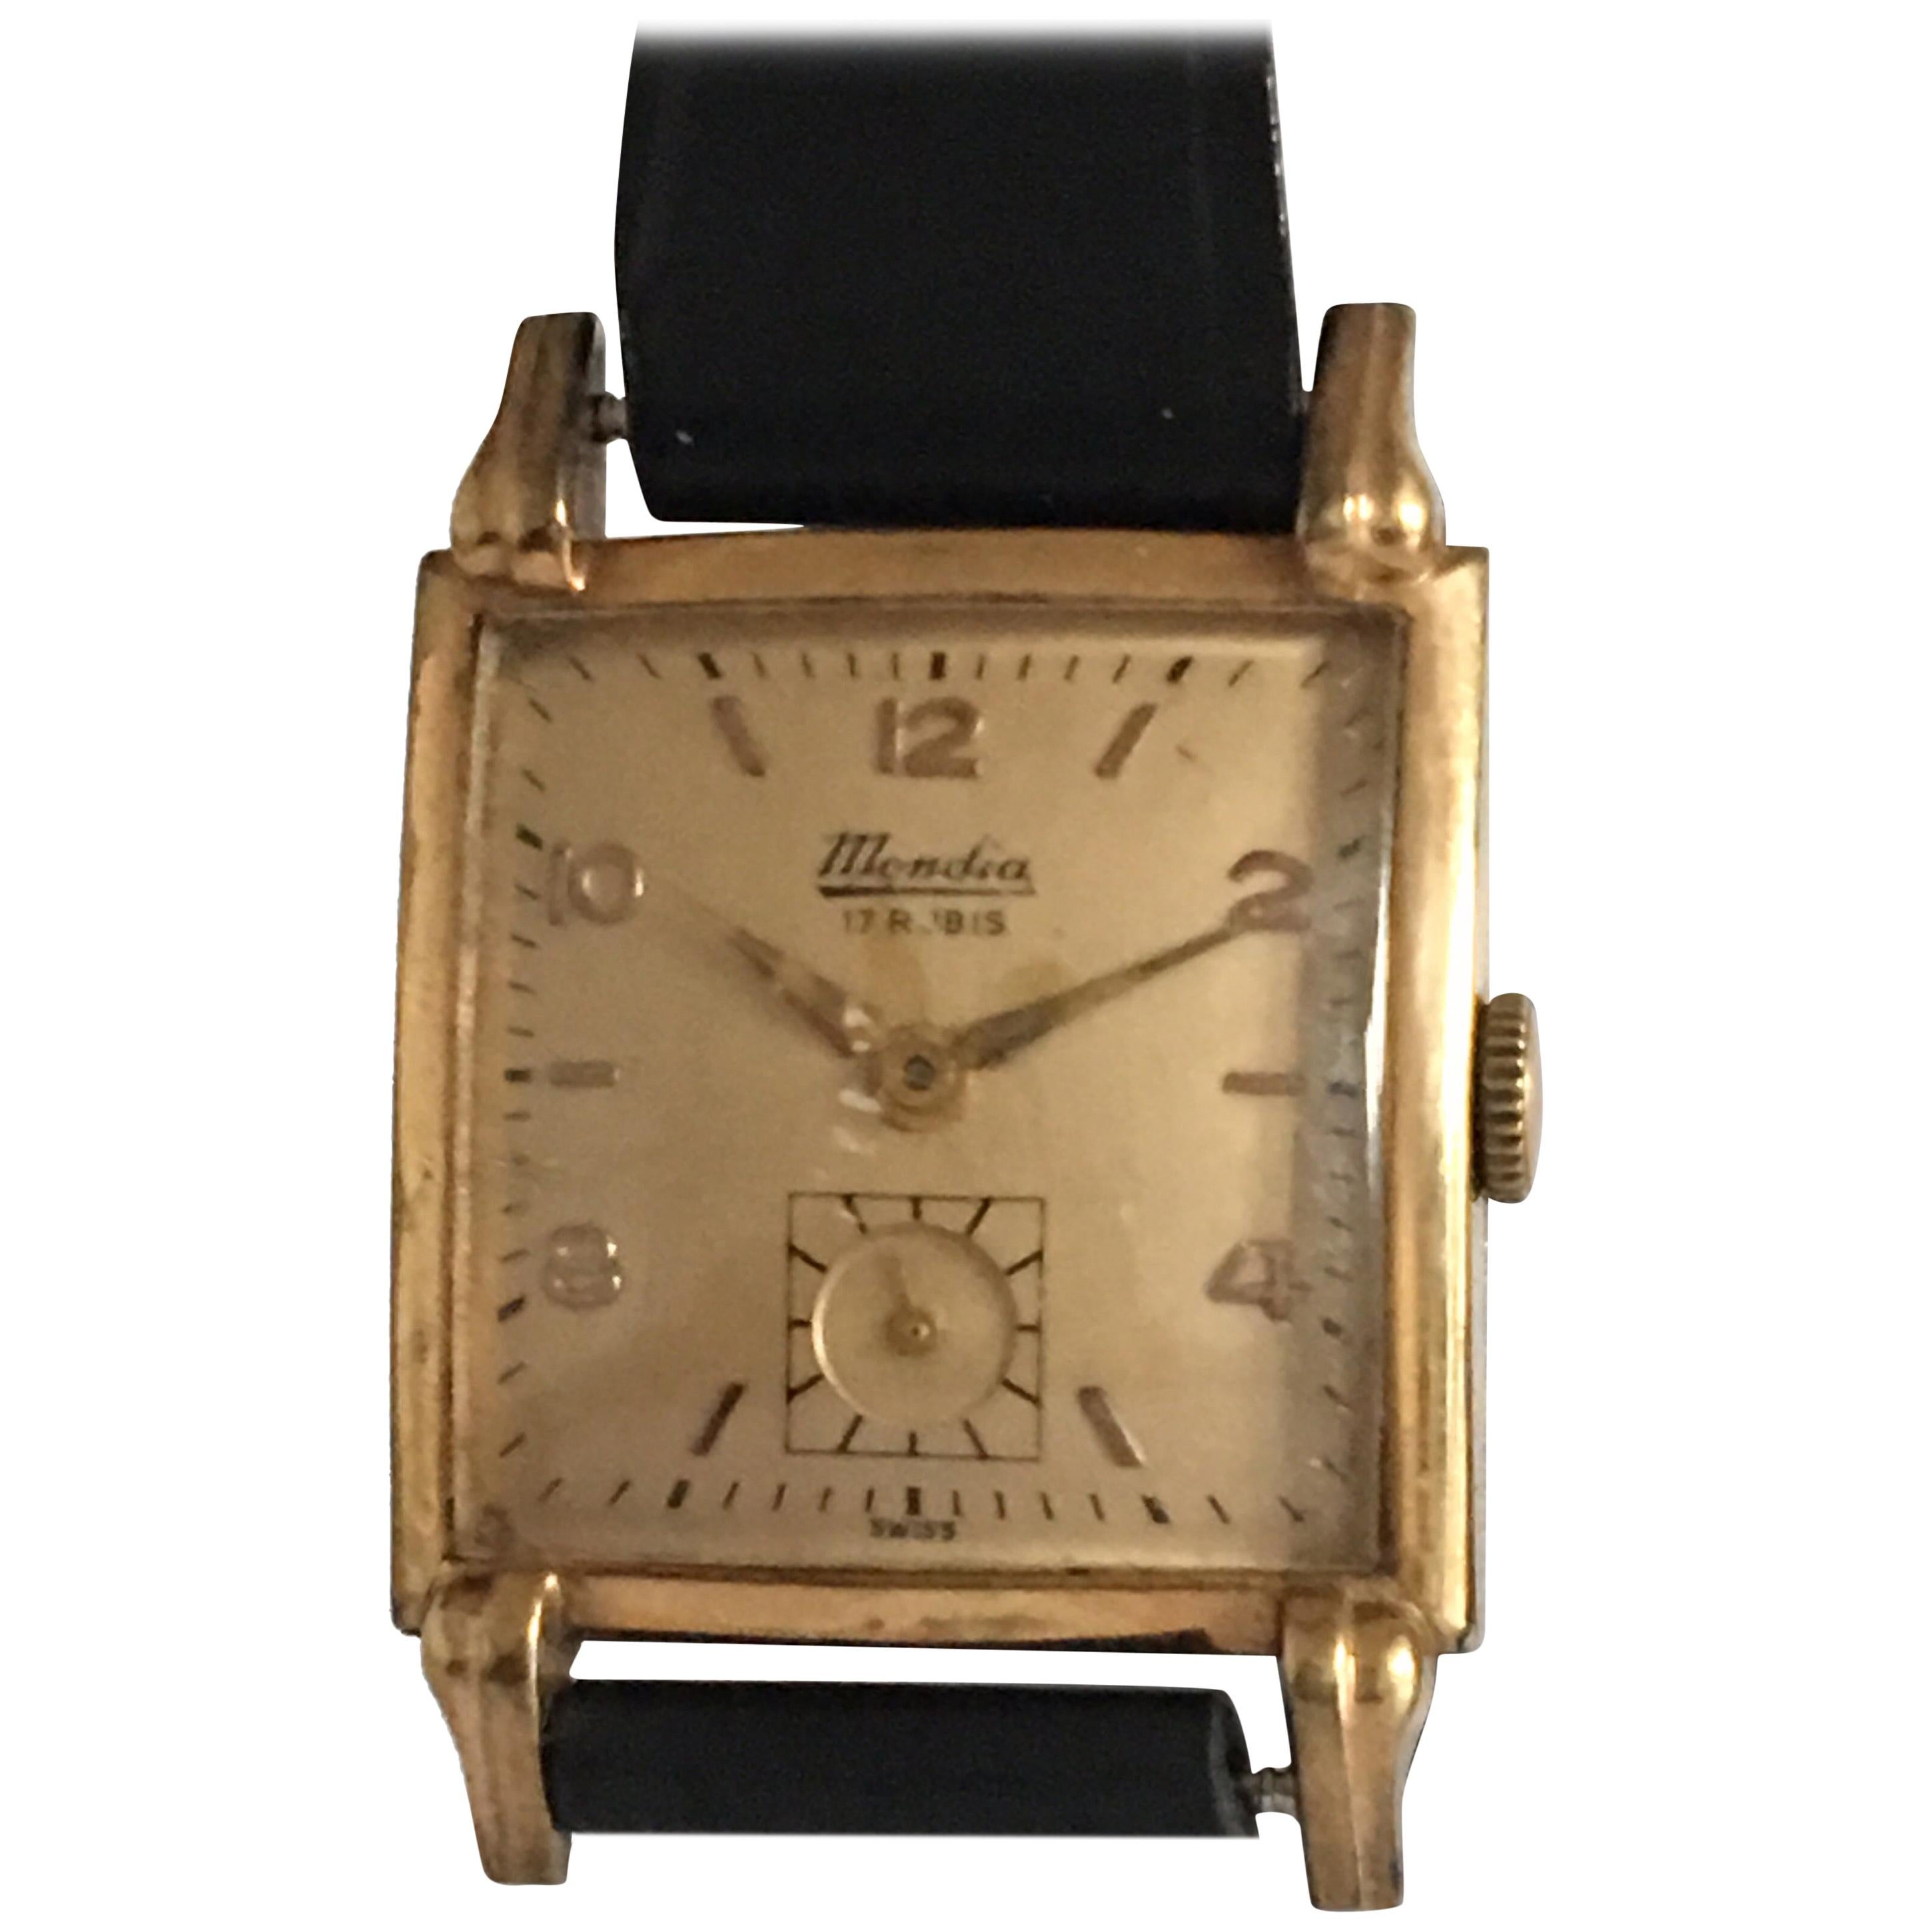 Gold-Plated Vintage 1940s Bulova Watch Co. Wristwatch